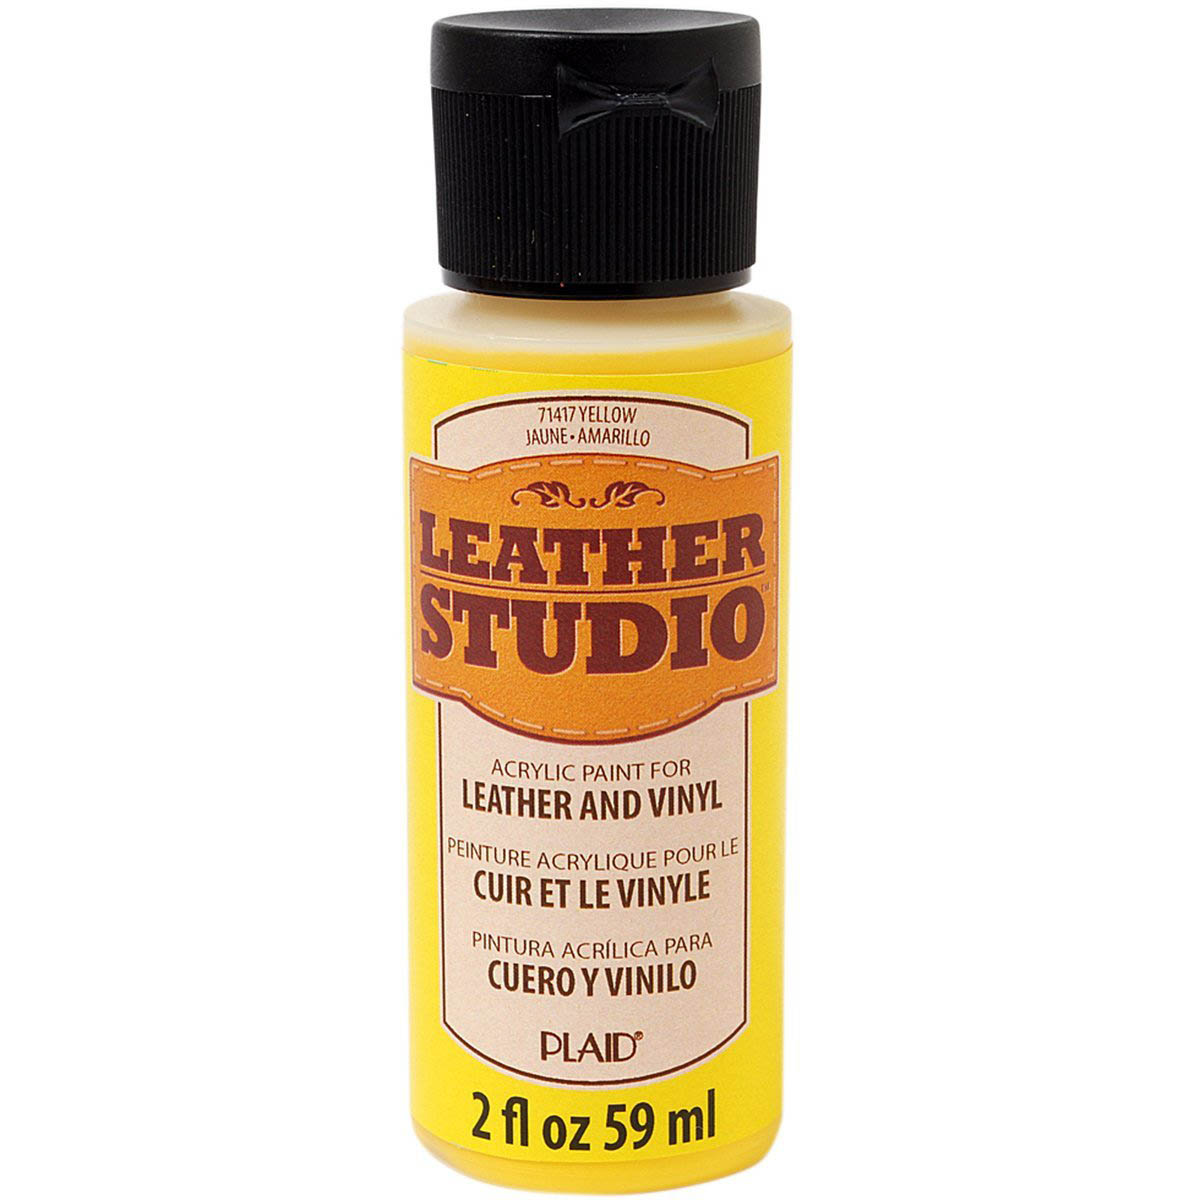 Leather Studio™ Leather & Vinyl Paint Colors - Yellow, 2 oz. - 71417